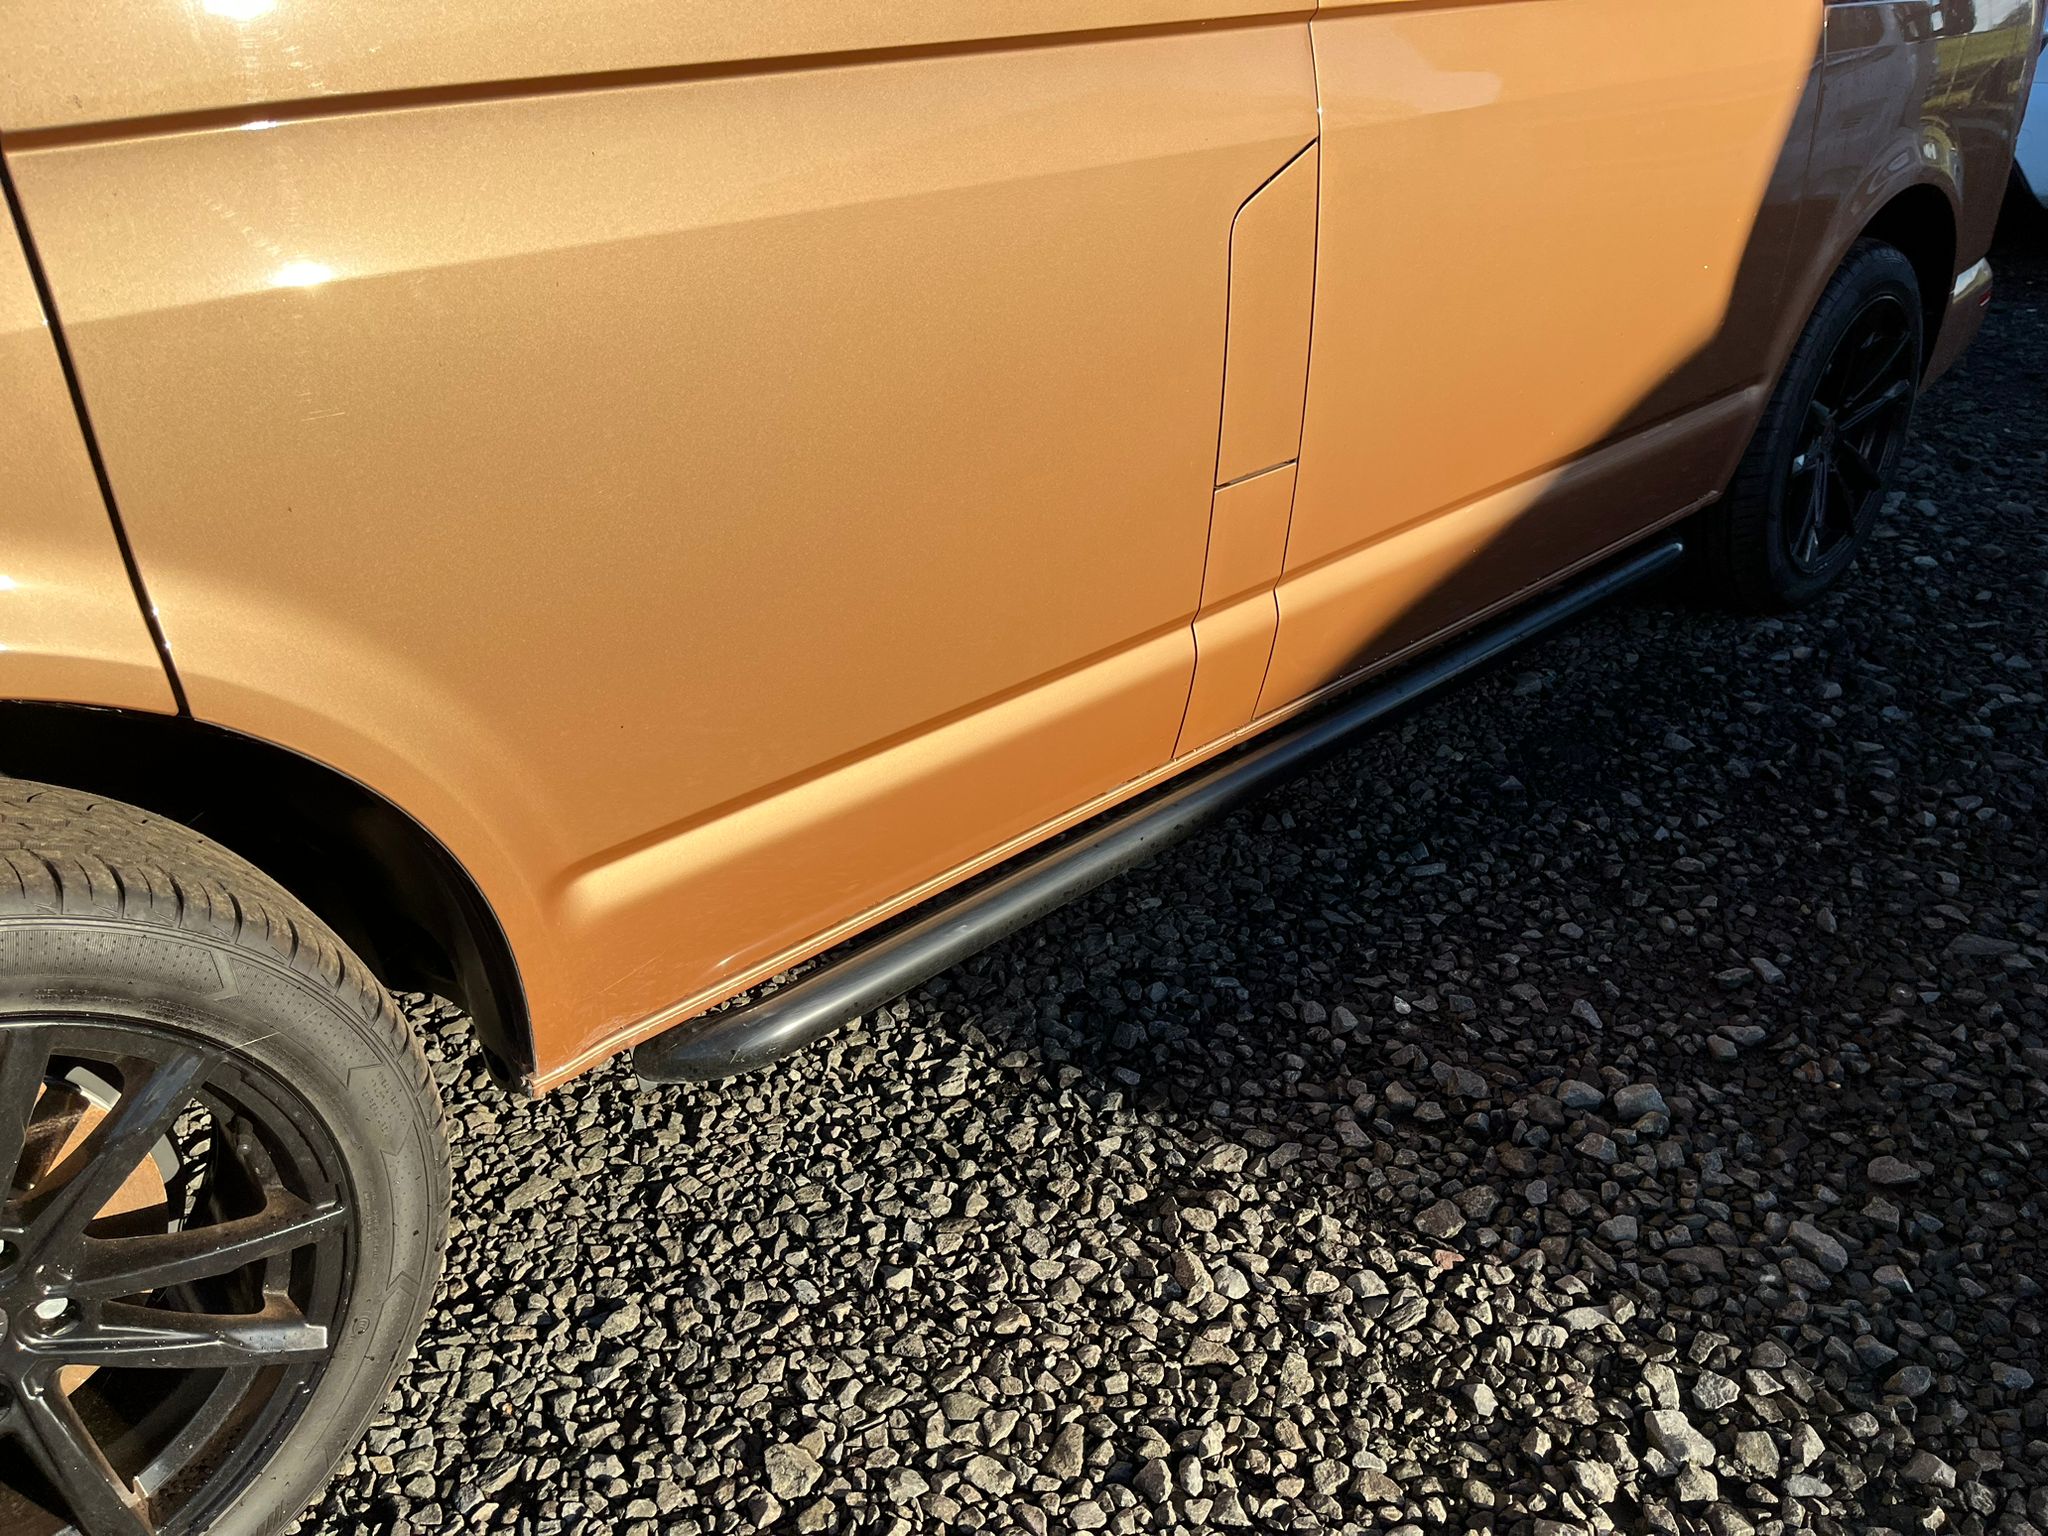 New DSG Automatic Volkswagen TCC Evolution - Copper Bronze